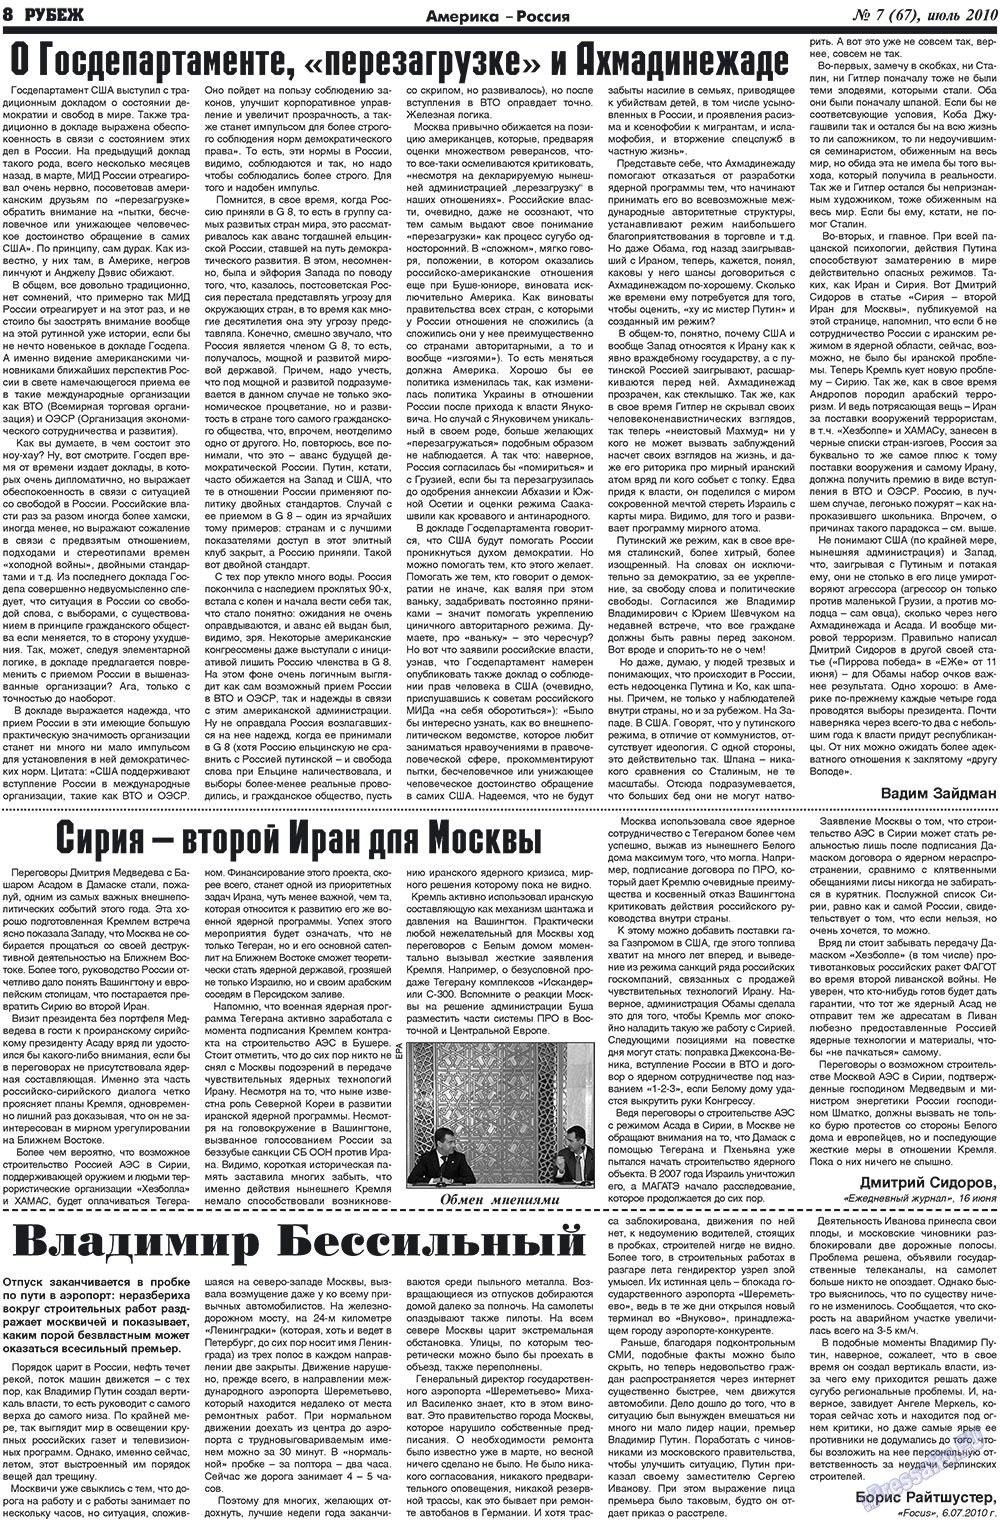 Рубеж, газета. 2010 №7 стр.8